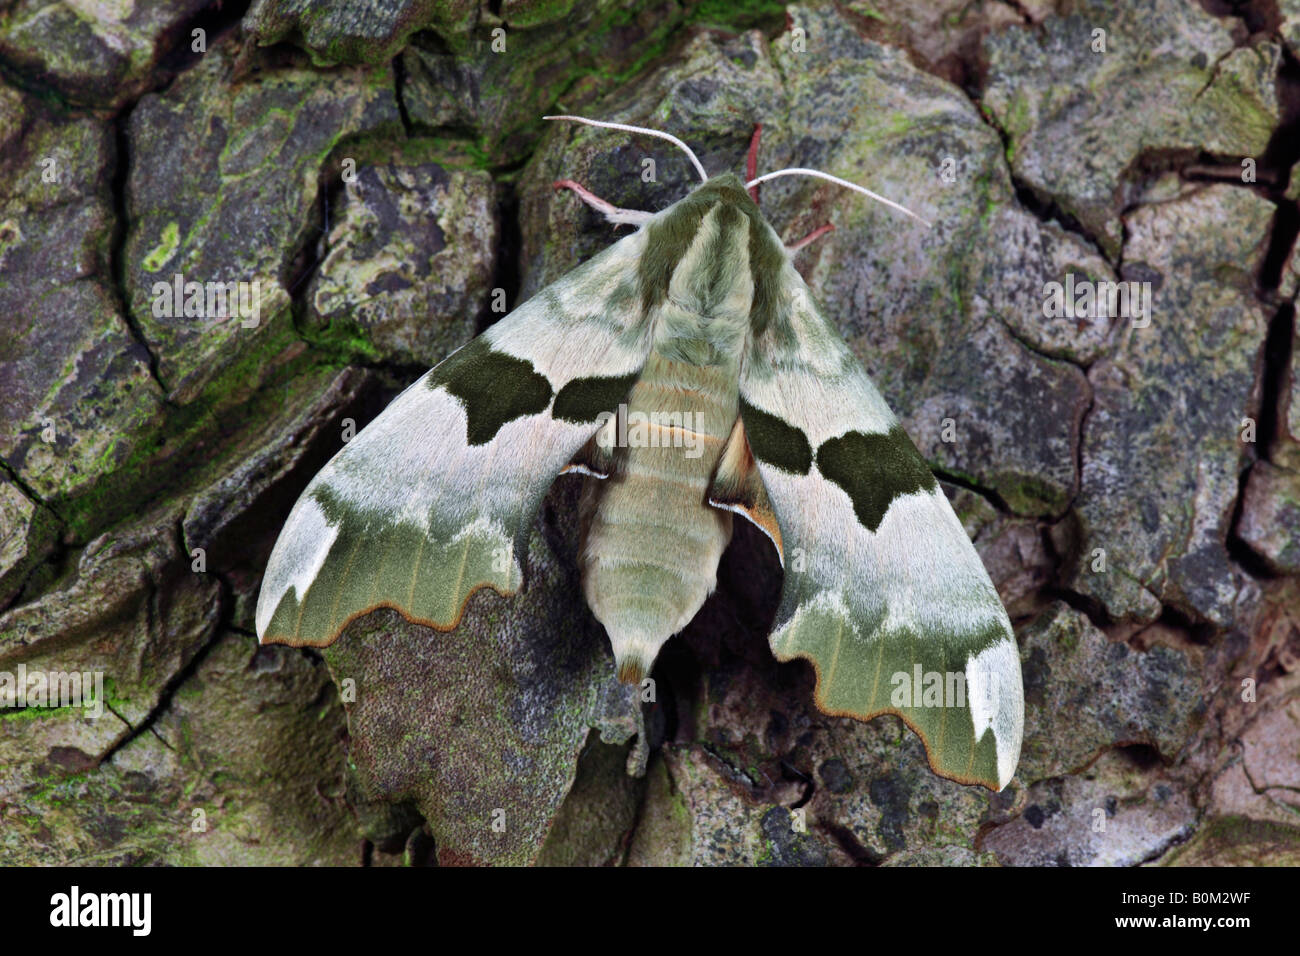 Lime Hawk moth Mimas tiliae at rest on log Potton Bedfordshire Stock Photo